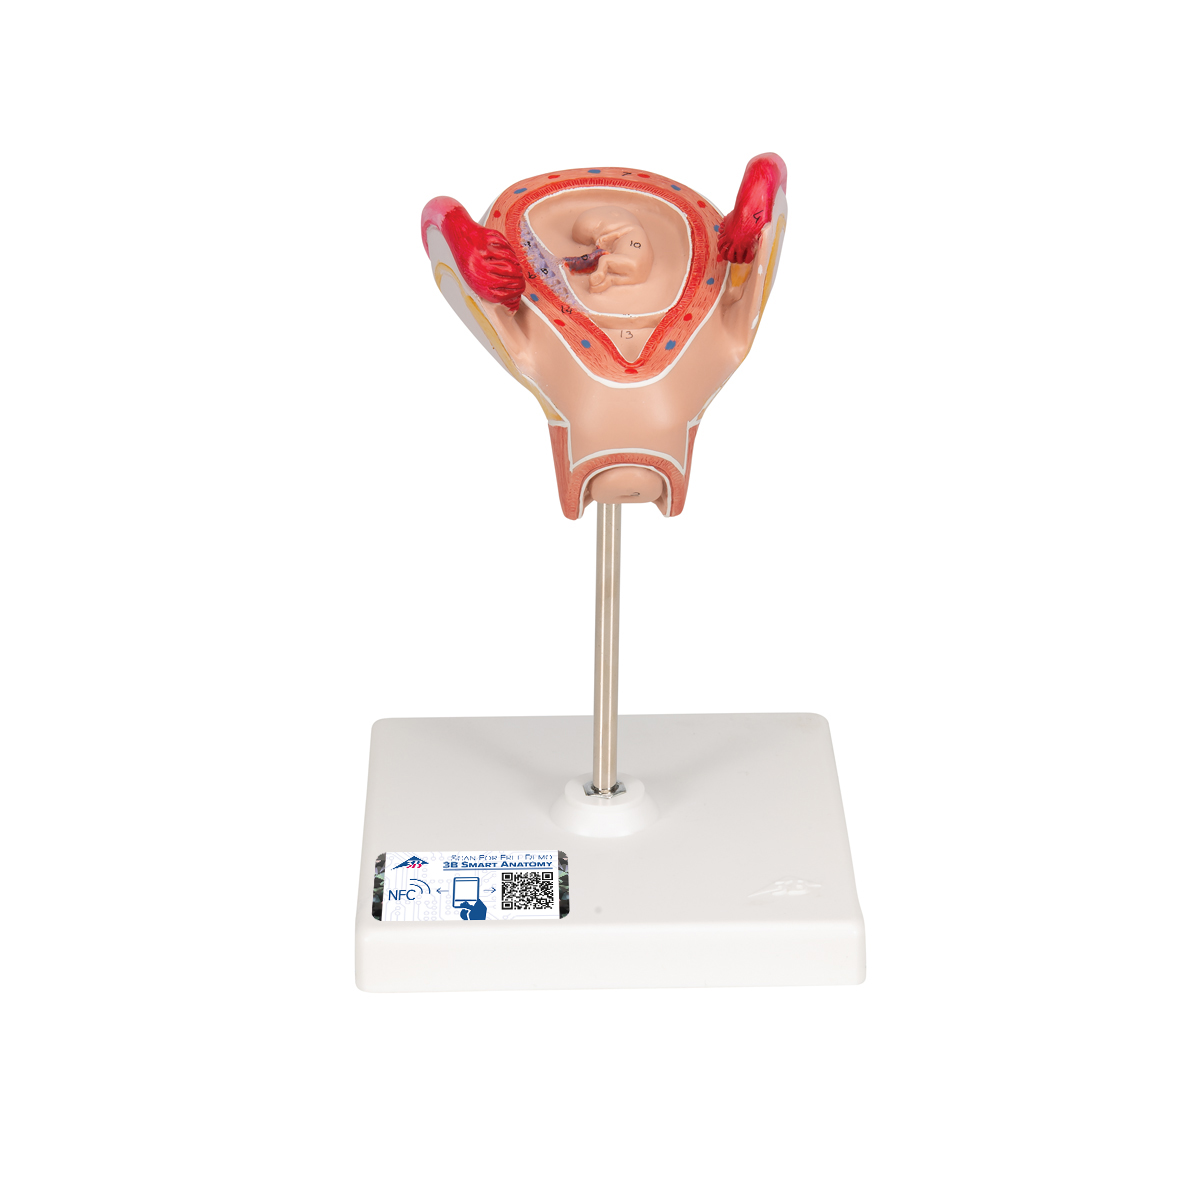 Embryo Modell, 2. Monat - 3B Smart Anatomy, Bestellnummer 1000323, L10/2, 3B Scientific